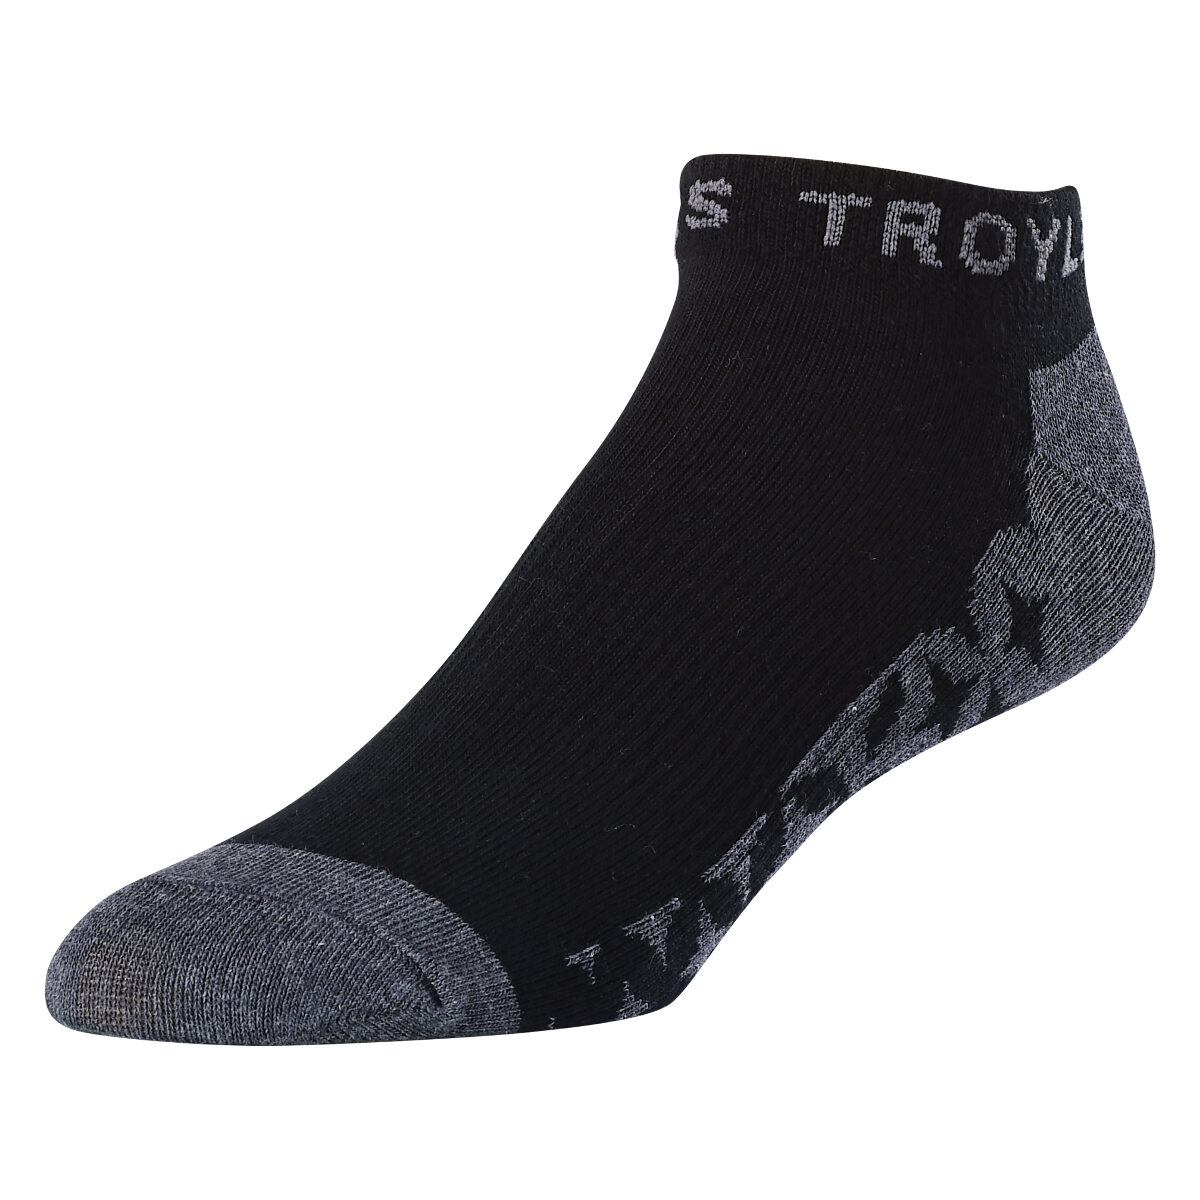 Troy Lee Designs Calze Starburst Ankle Black, 3 Pack